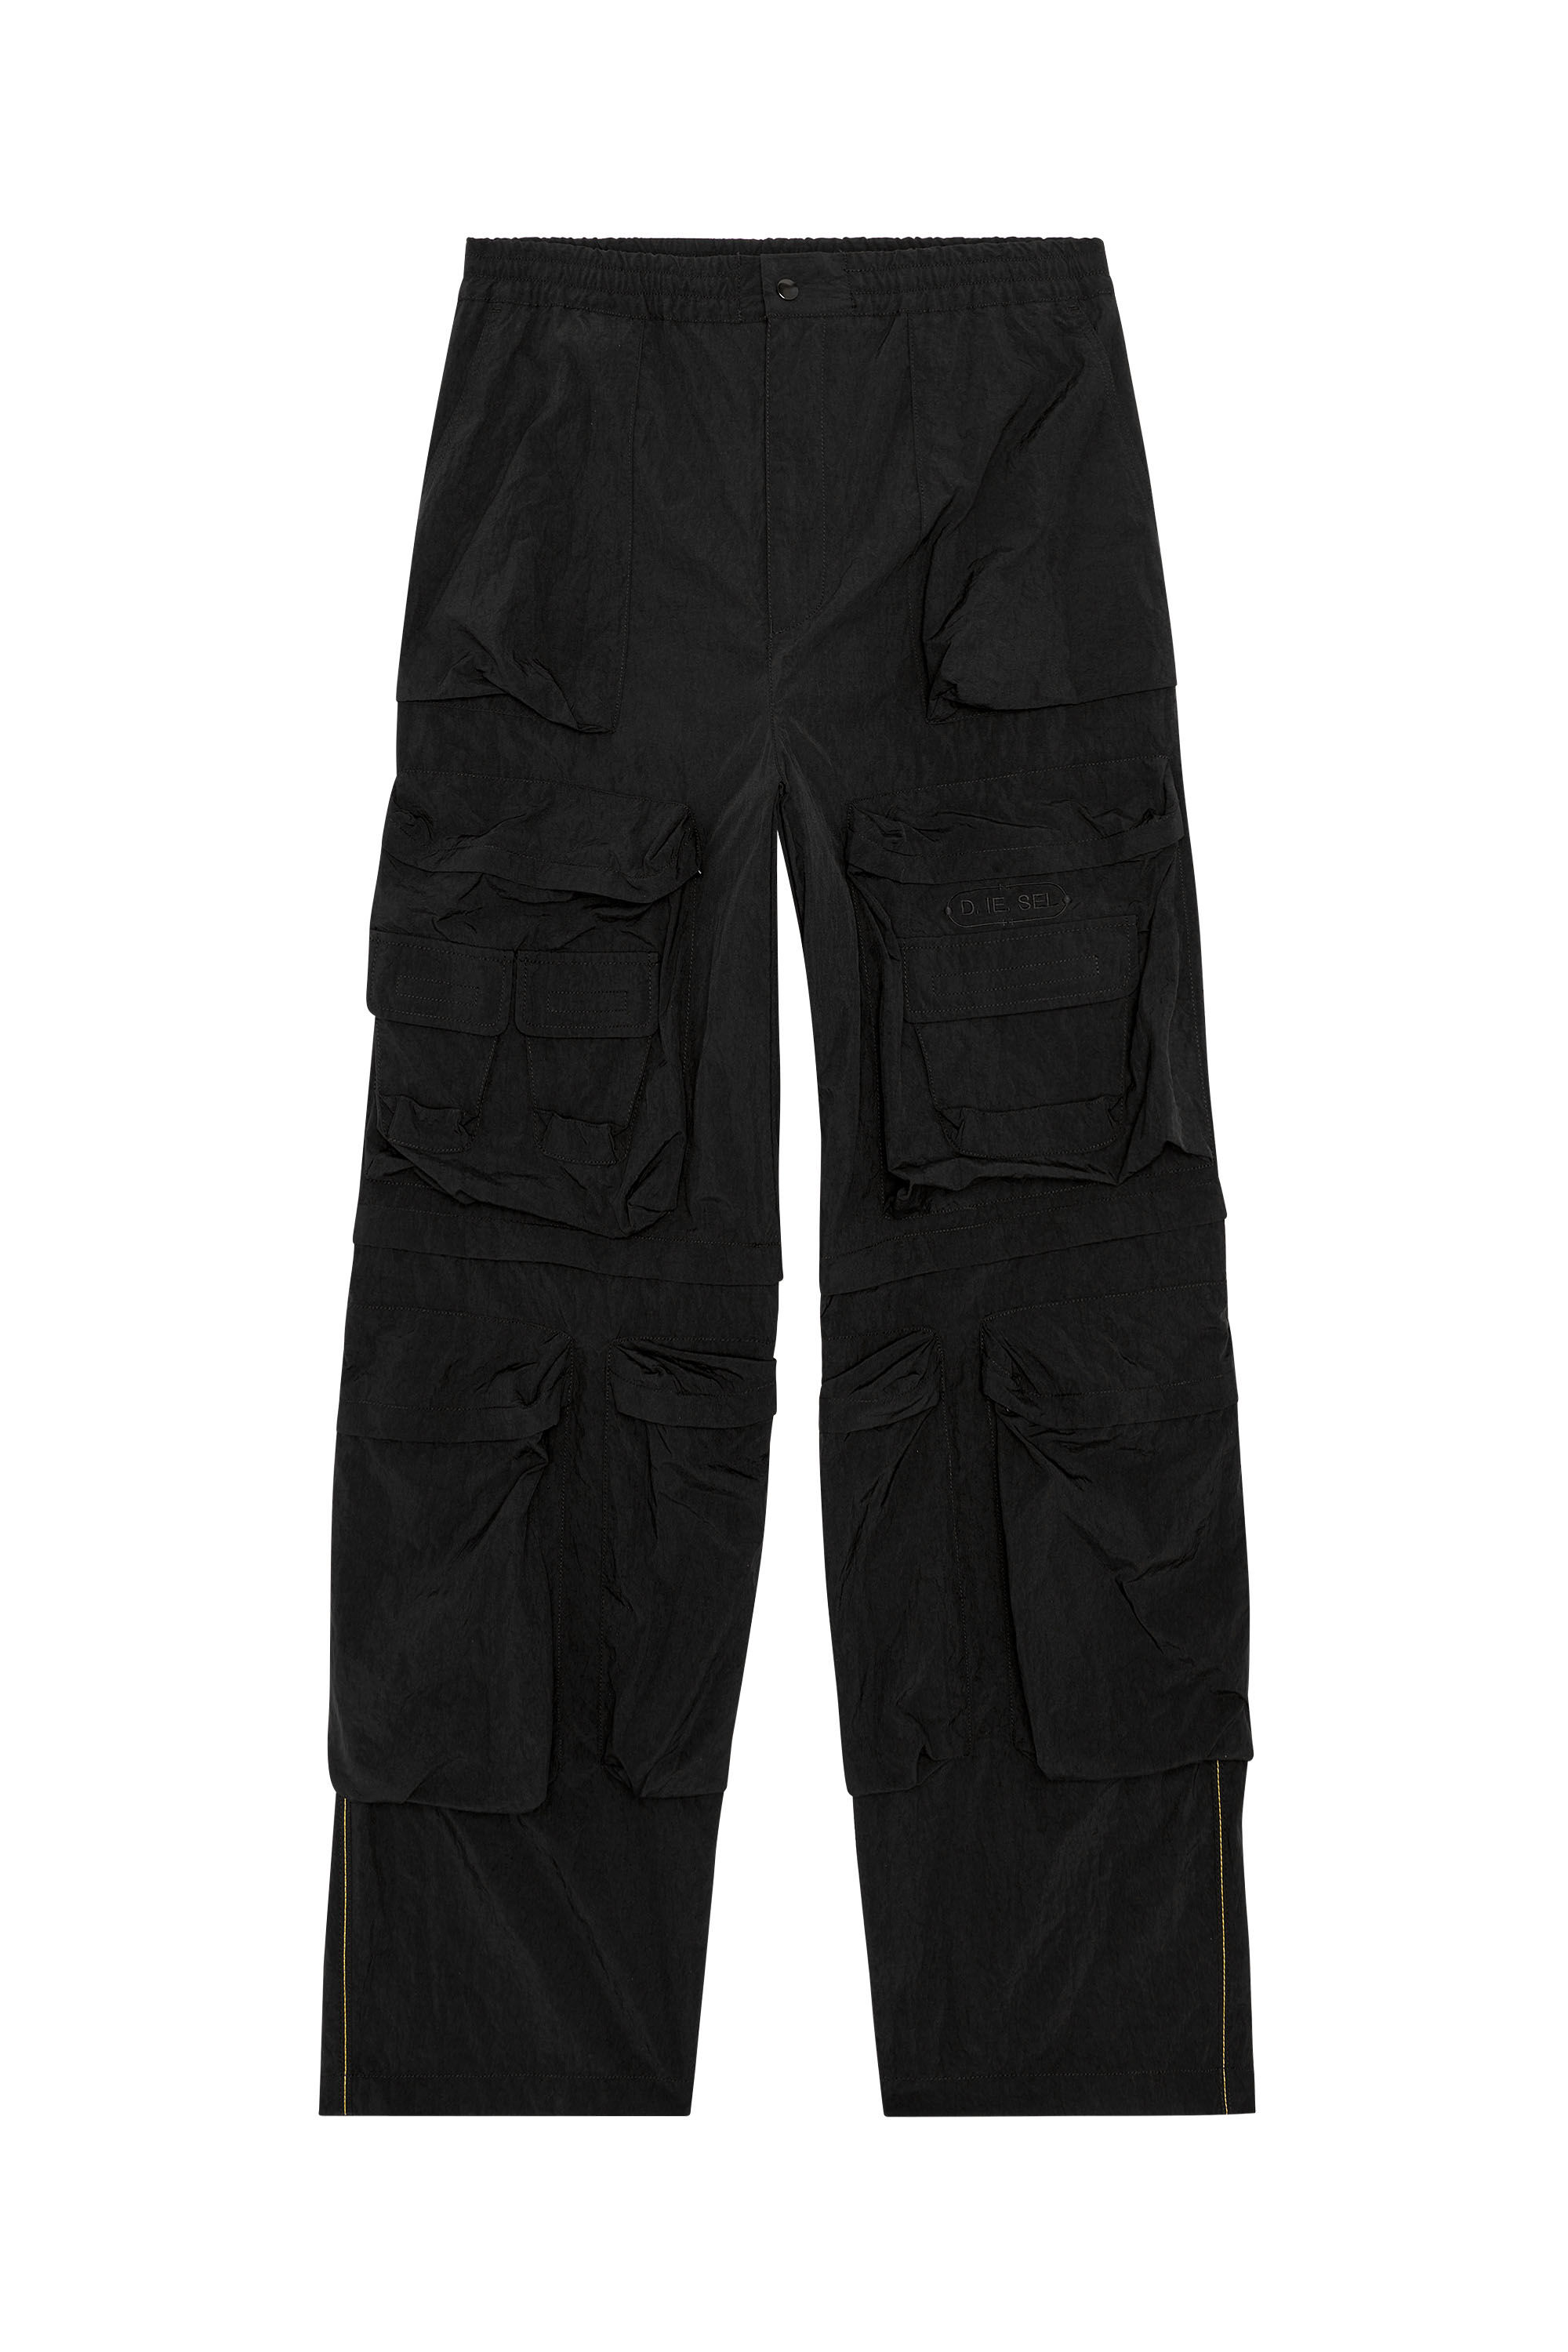 Men's Cargo pants in wrinkled nylon canvas | Black | Diesel